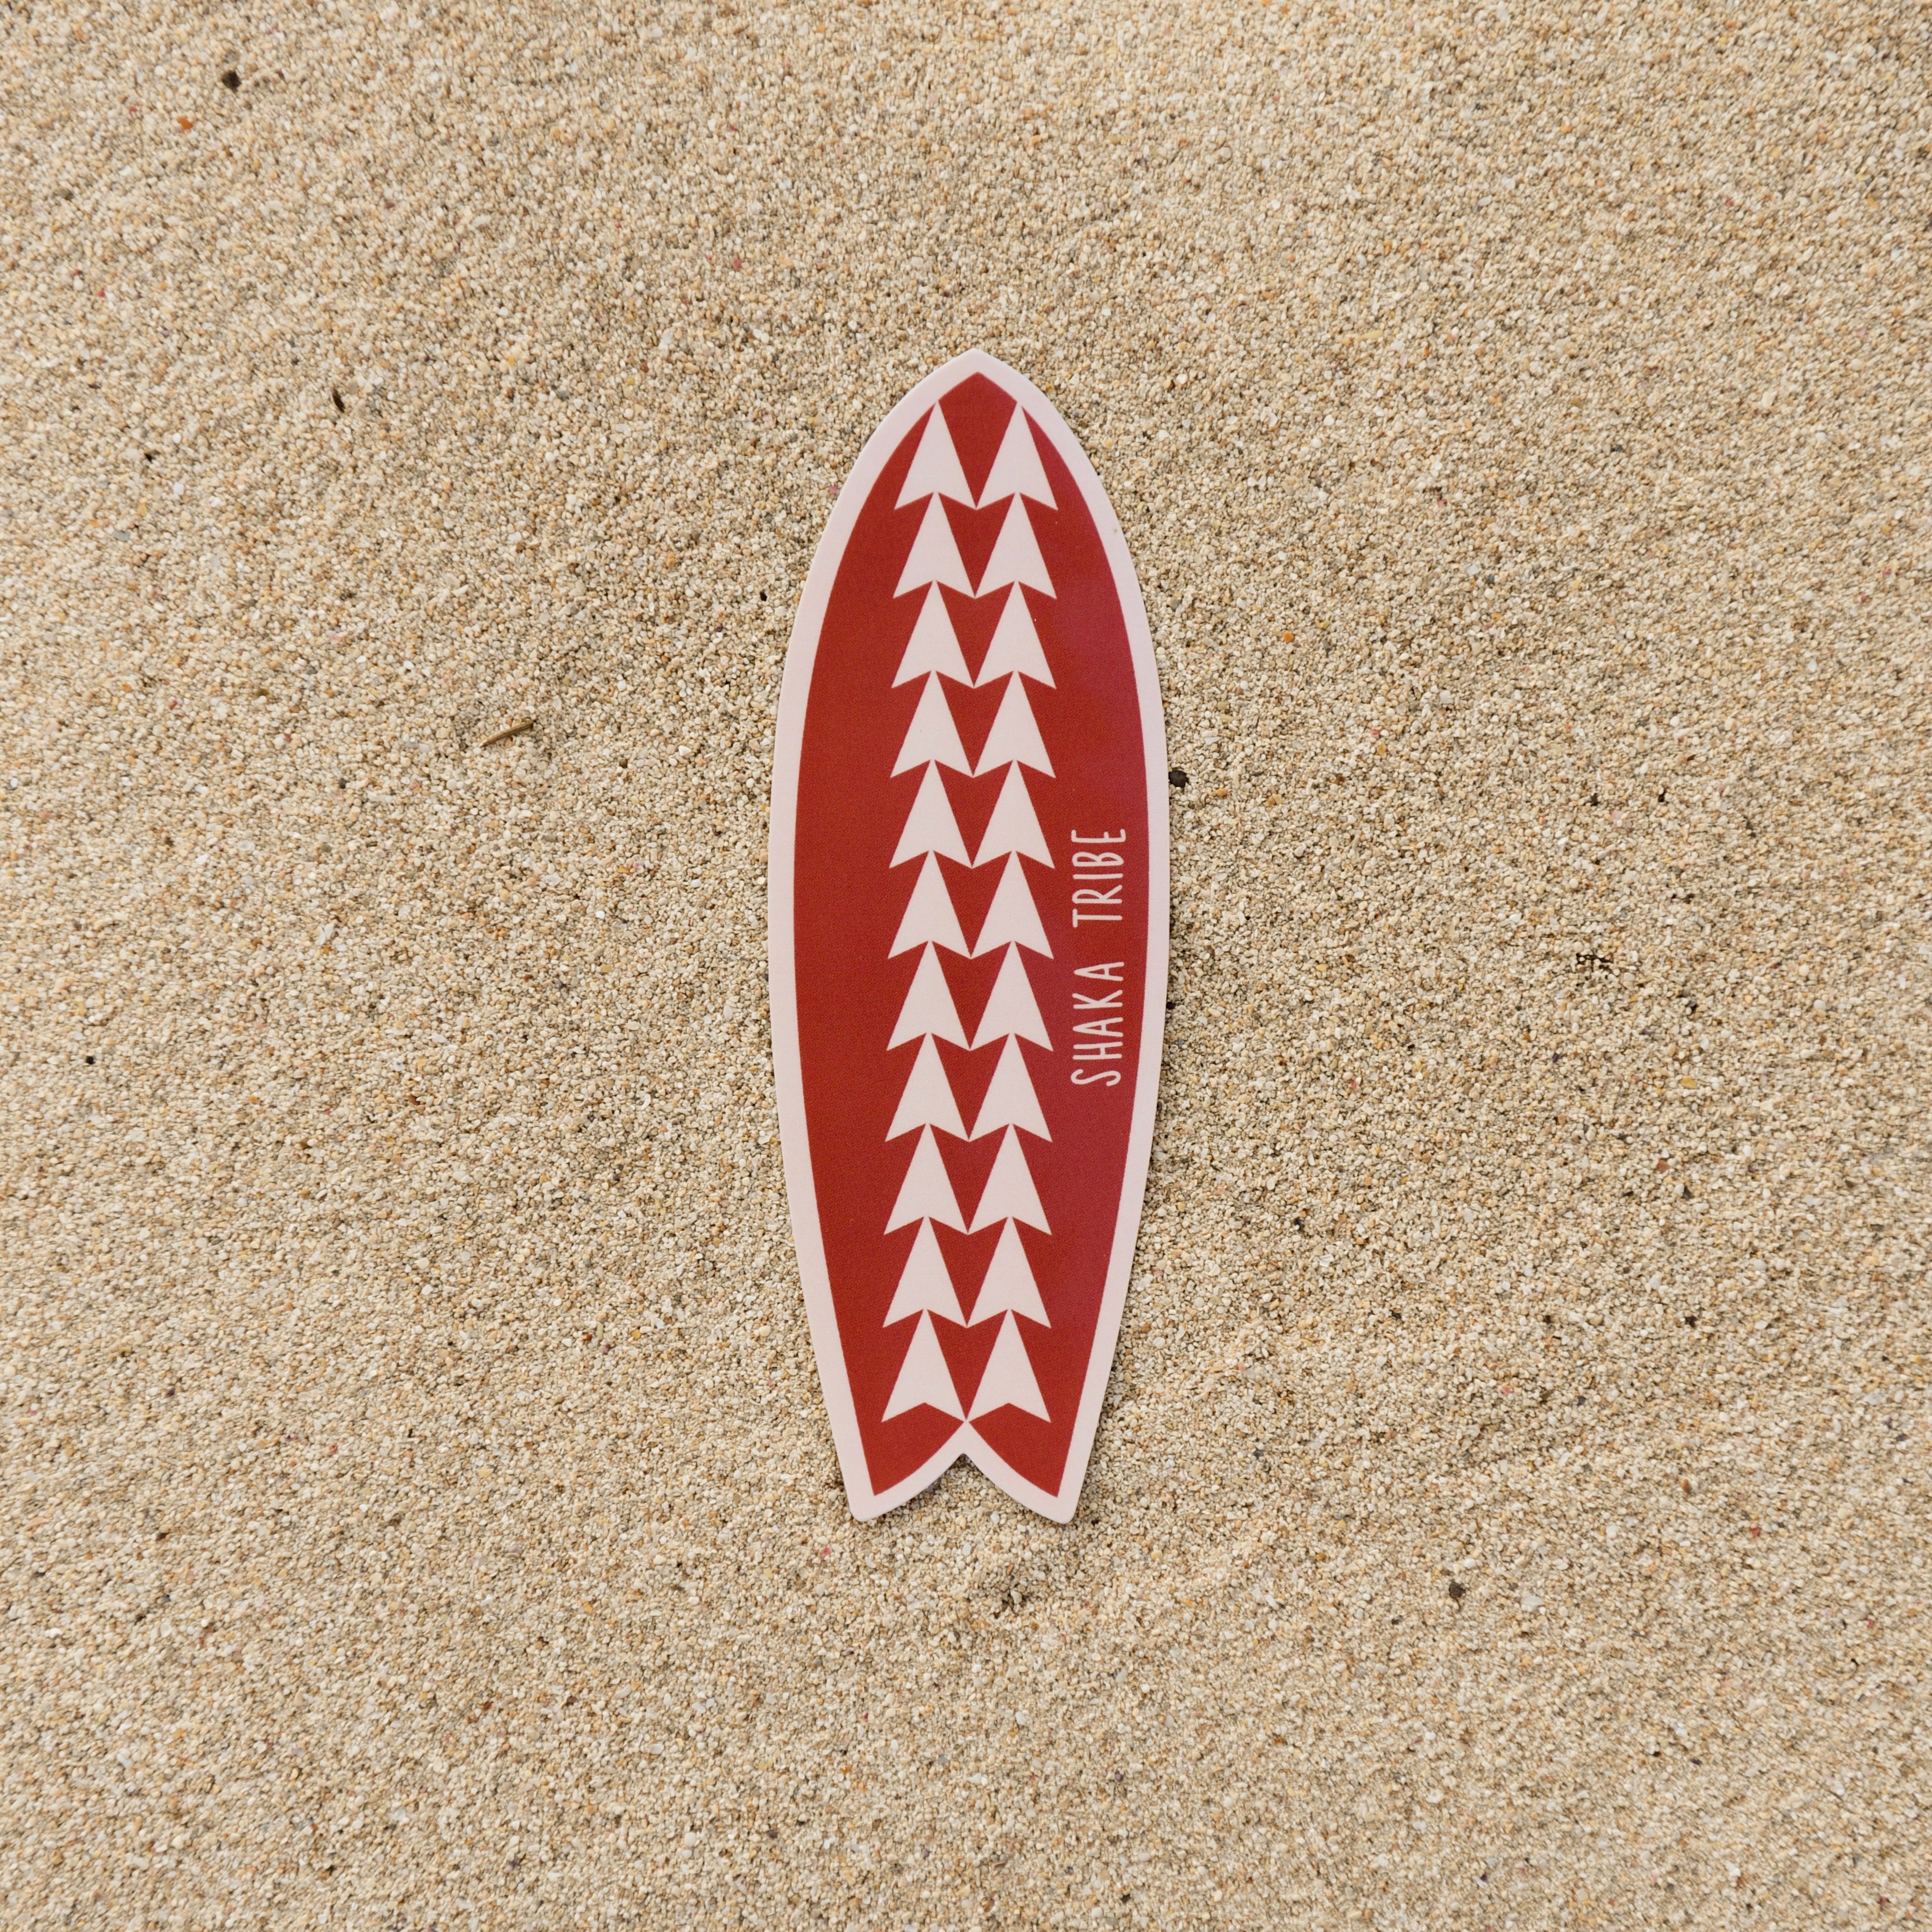 Mālama ‘Aina - Surfboard Sticker-Single Sticker